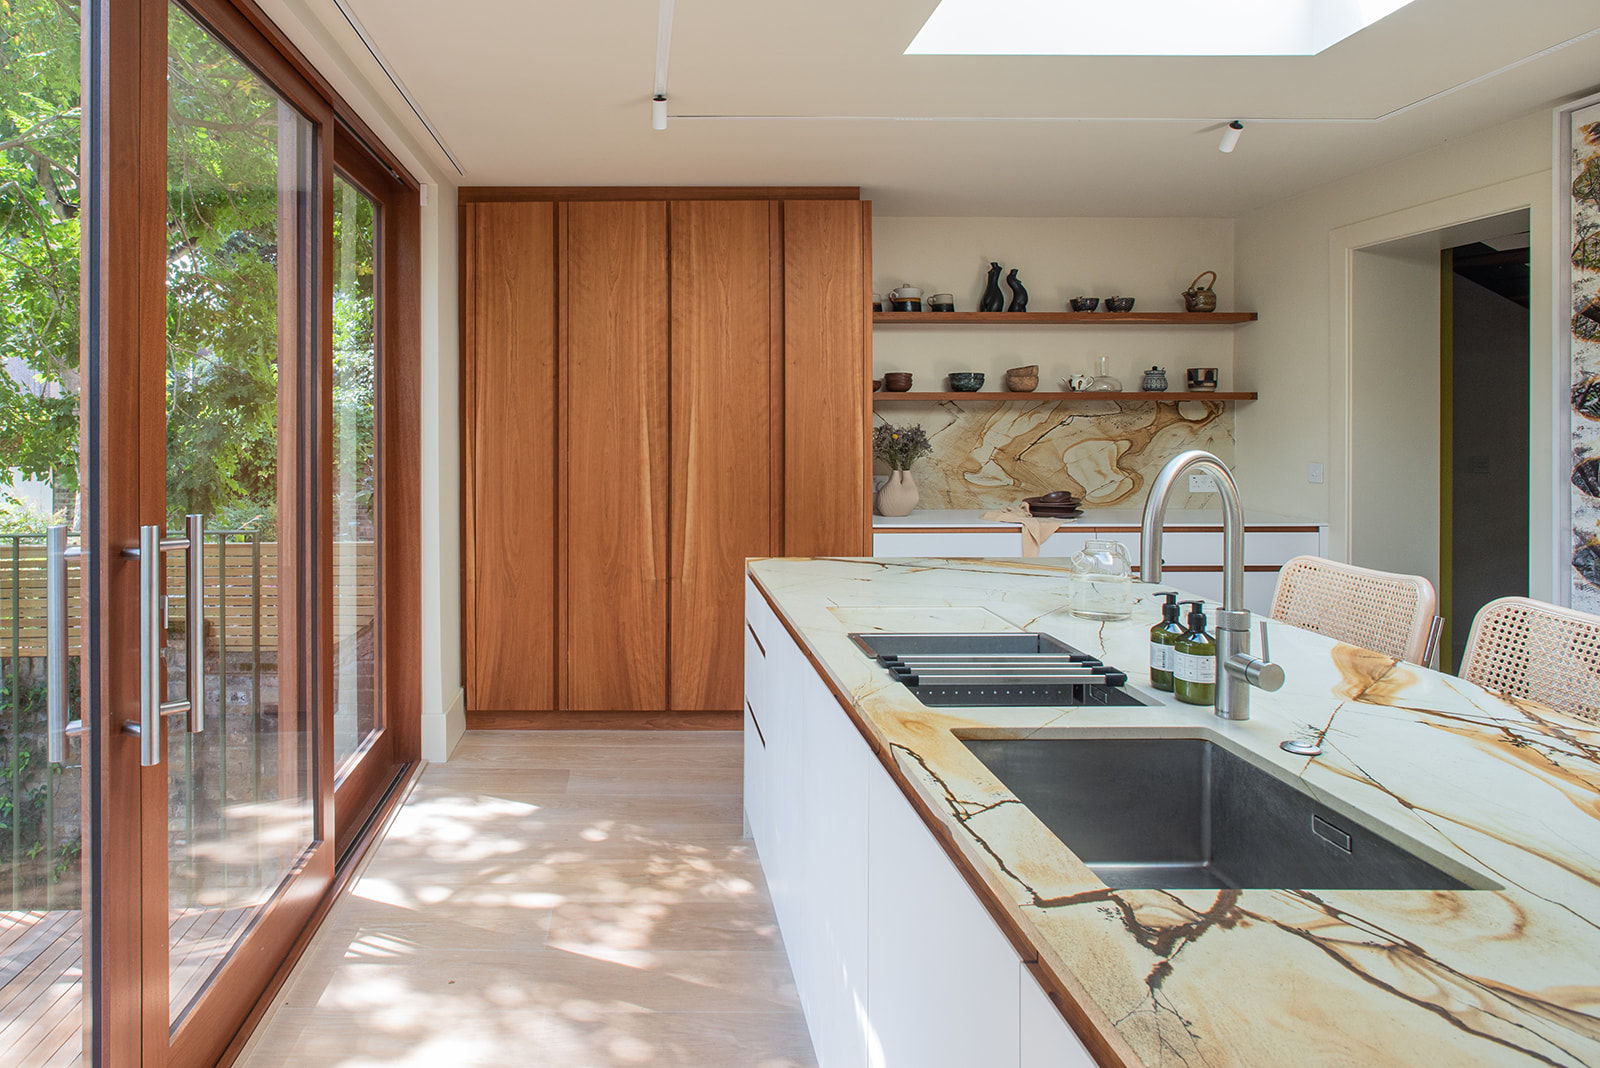 Kitchen extension by FMB member Hawksmoor Construction Ltd